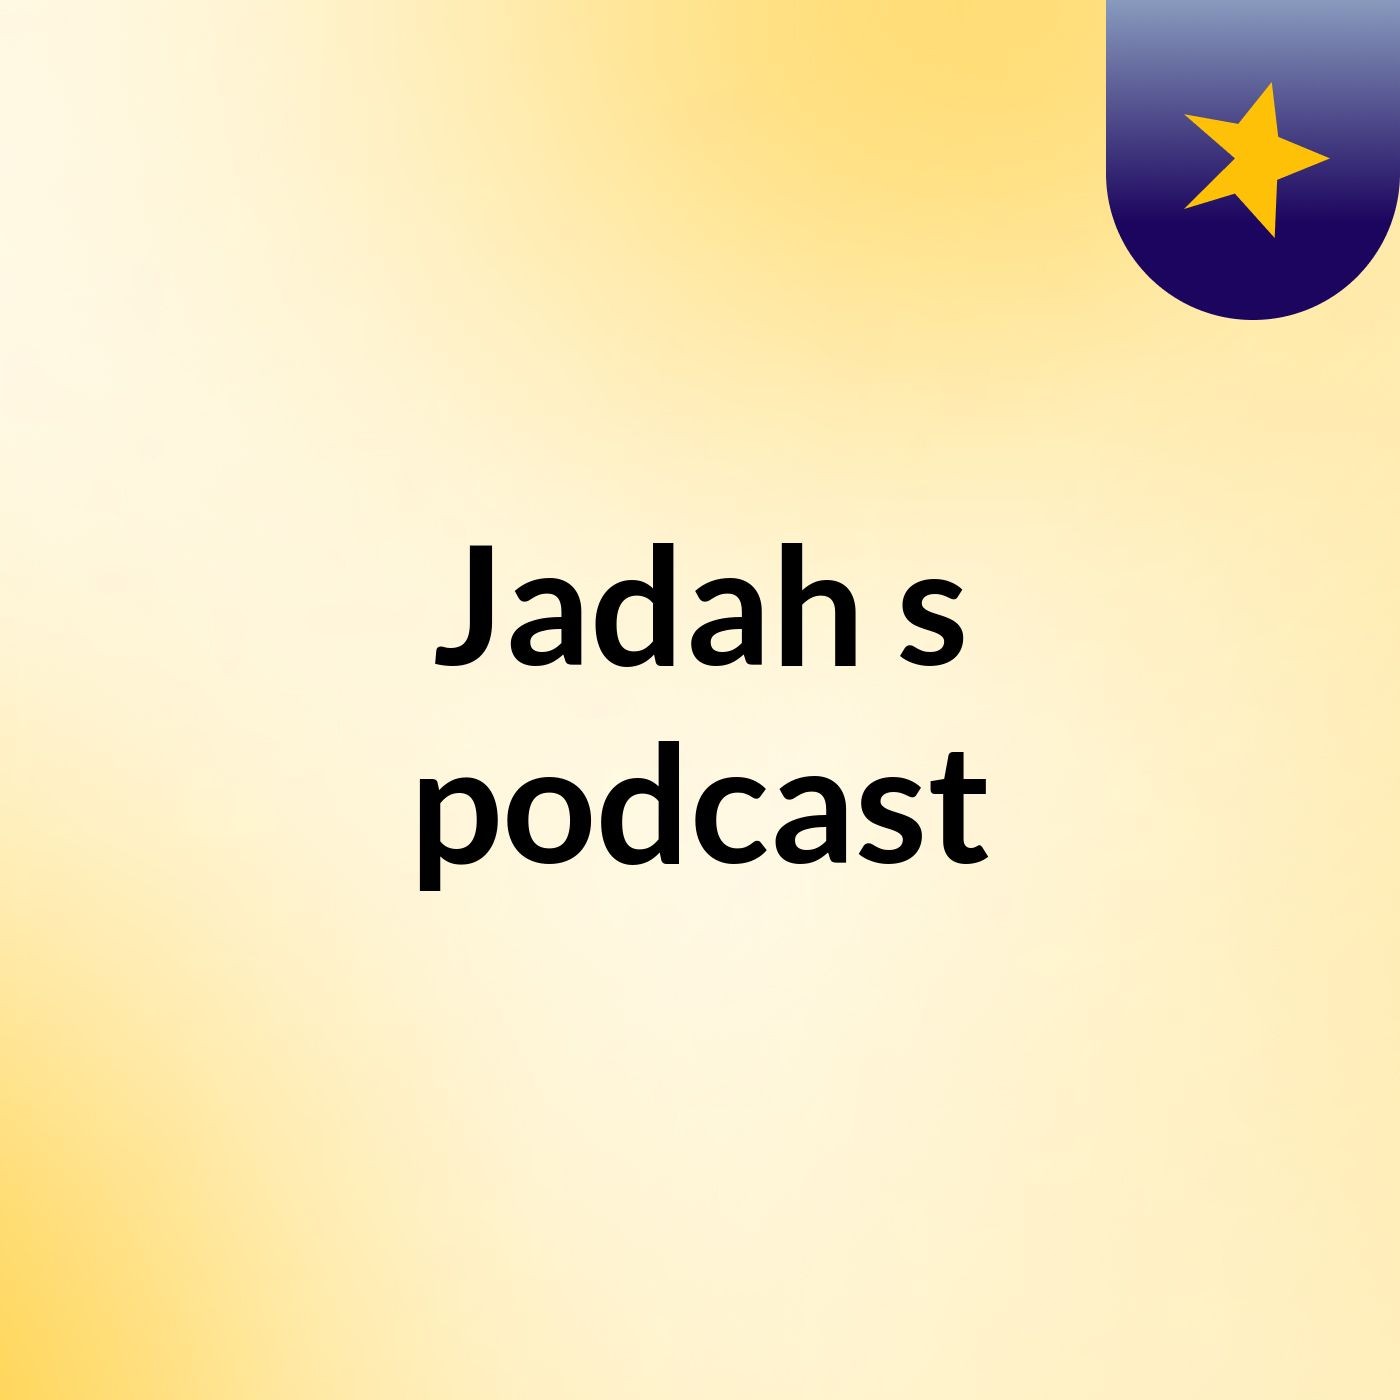 Episode 4 - Jadah's podcast